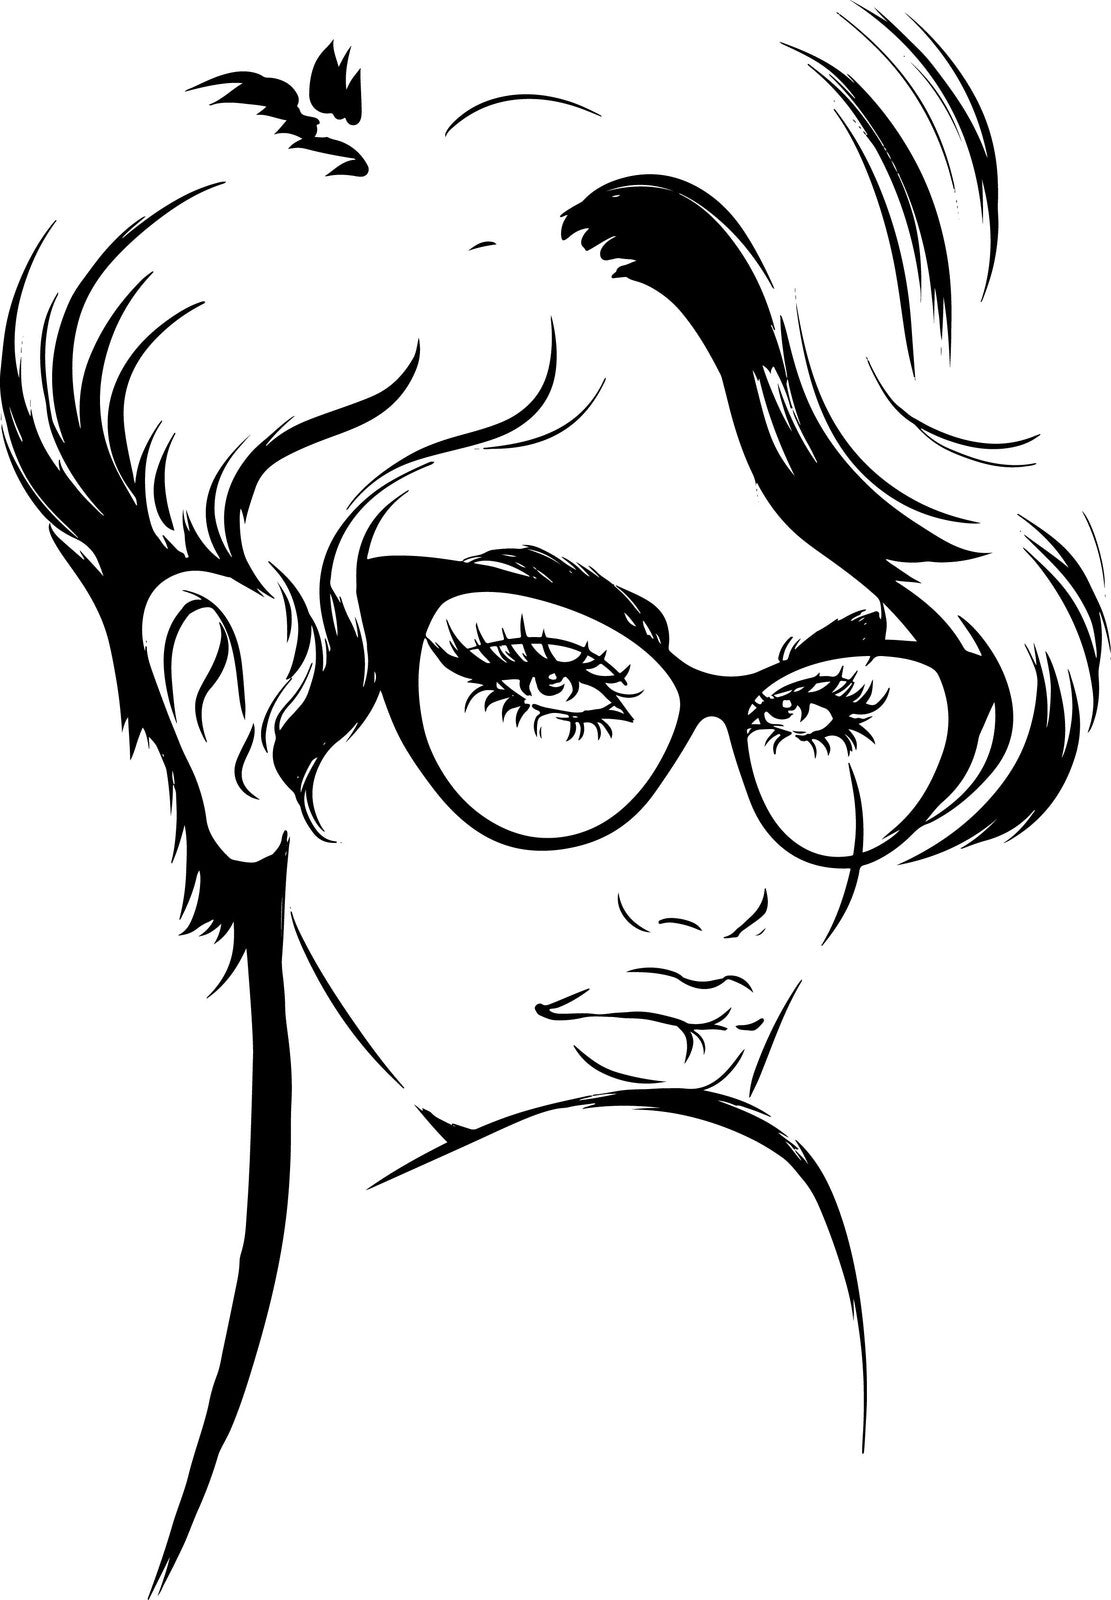 Lens - Gorgeous Women Portraits With Fashionable Glasses (PDF Book)